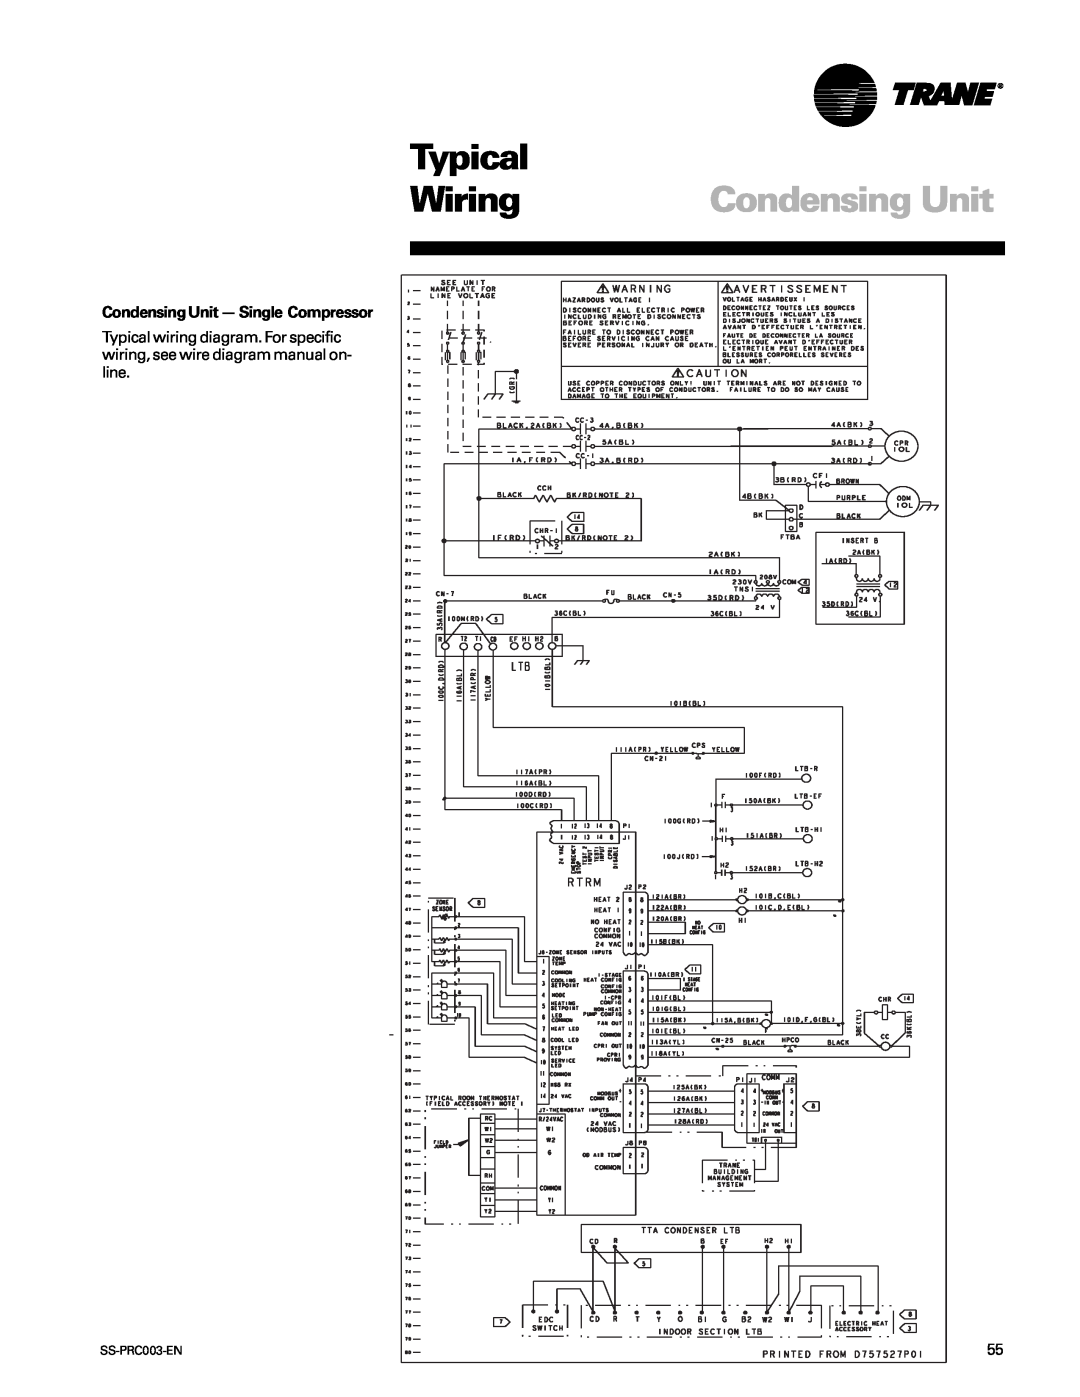 Trane SS-PRC003-EN manual Typical, Wiring, Condensing Unit - Single Compressor 